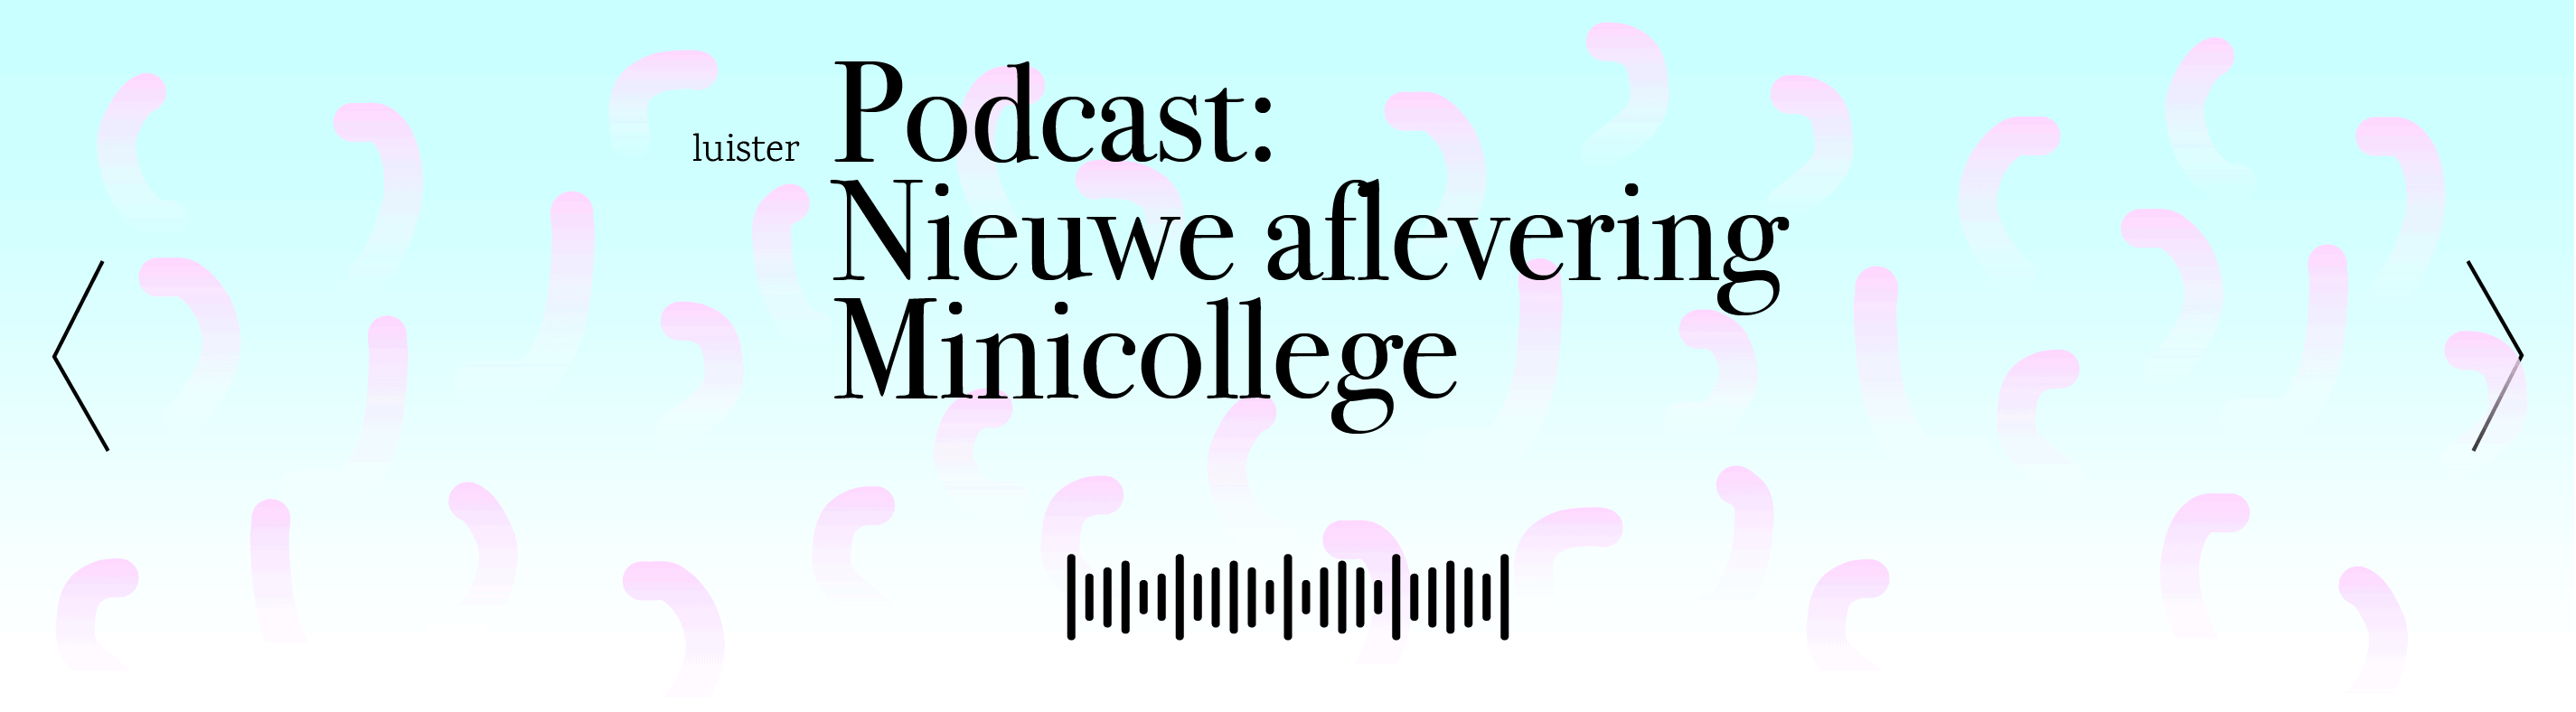 24classics_podcast